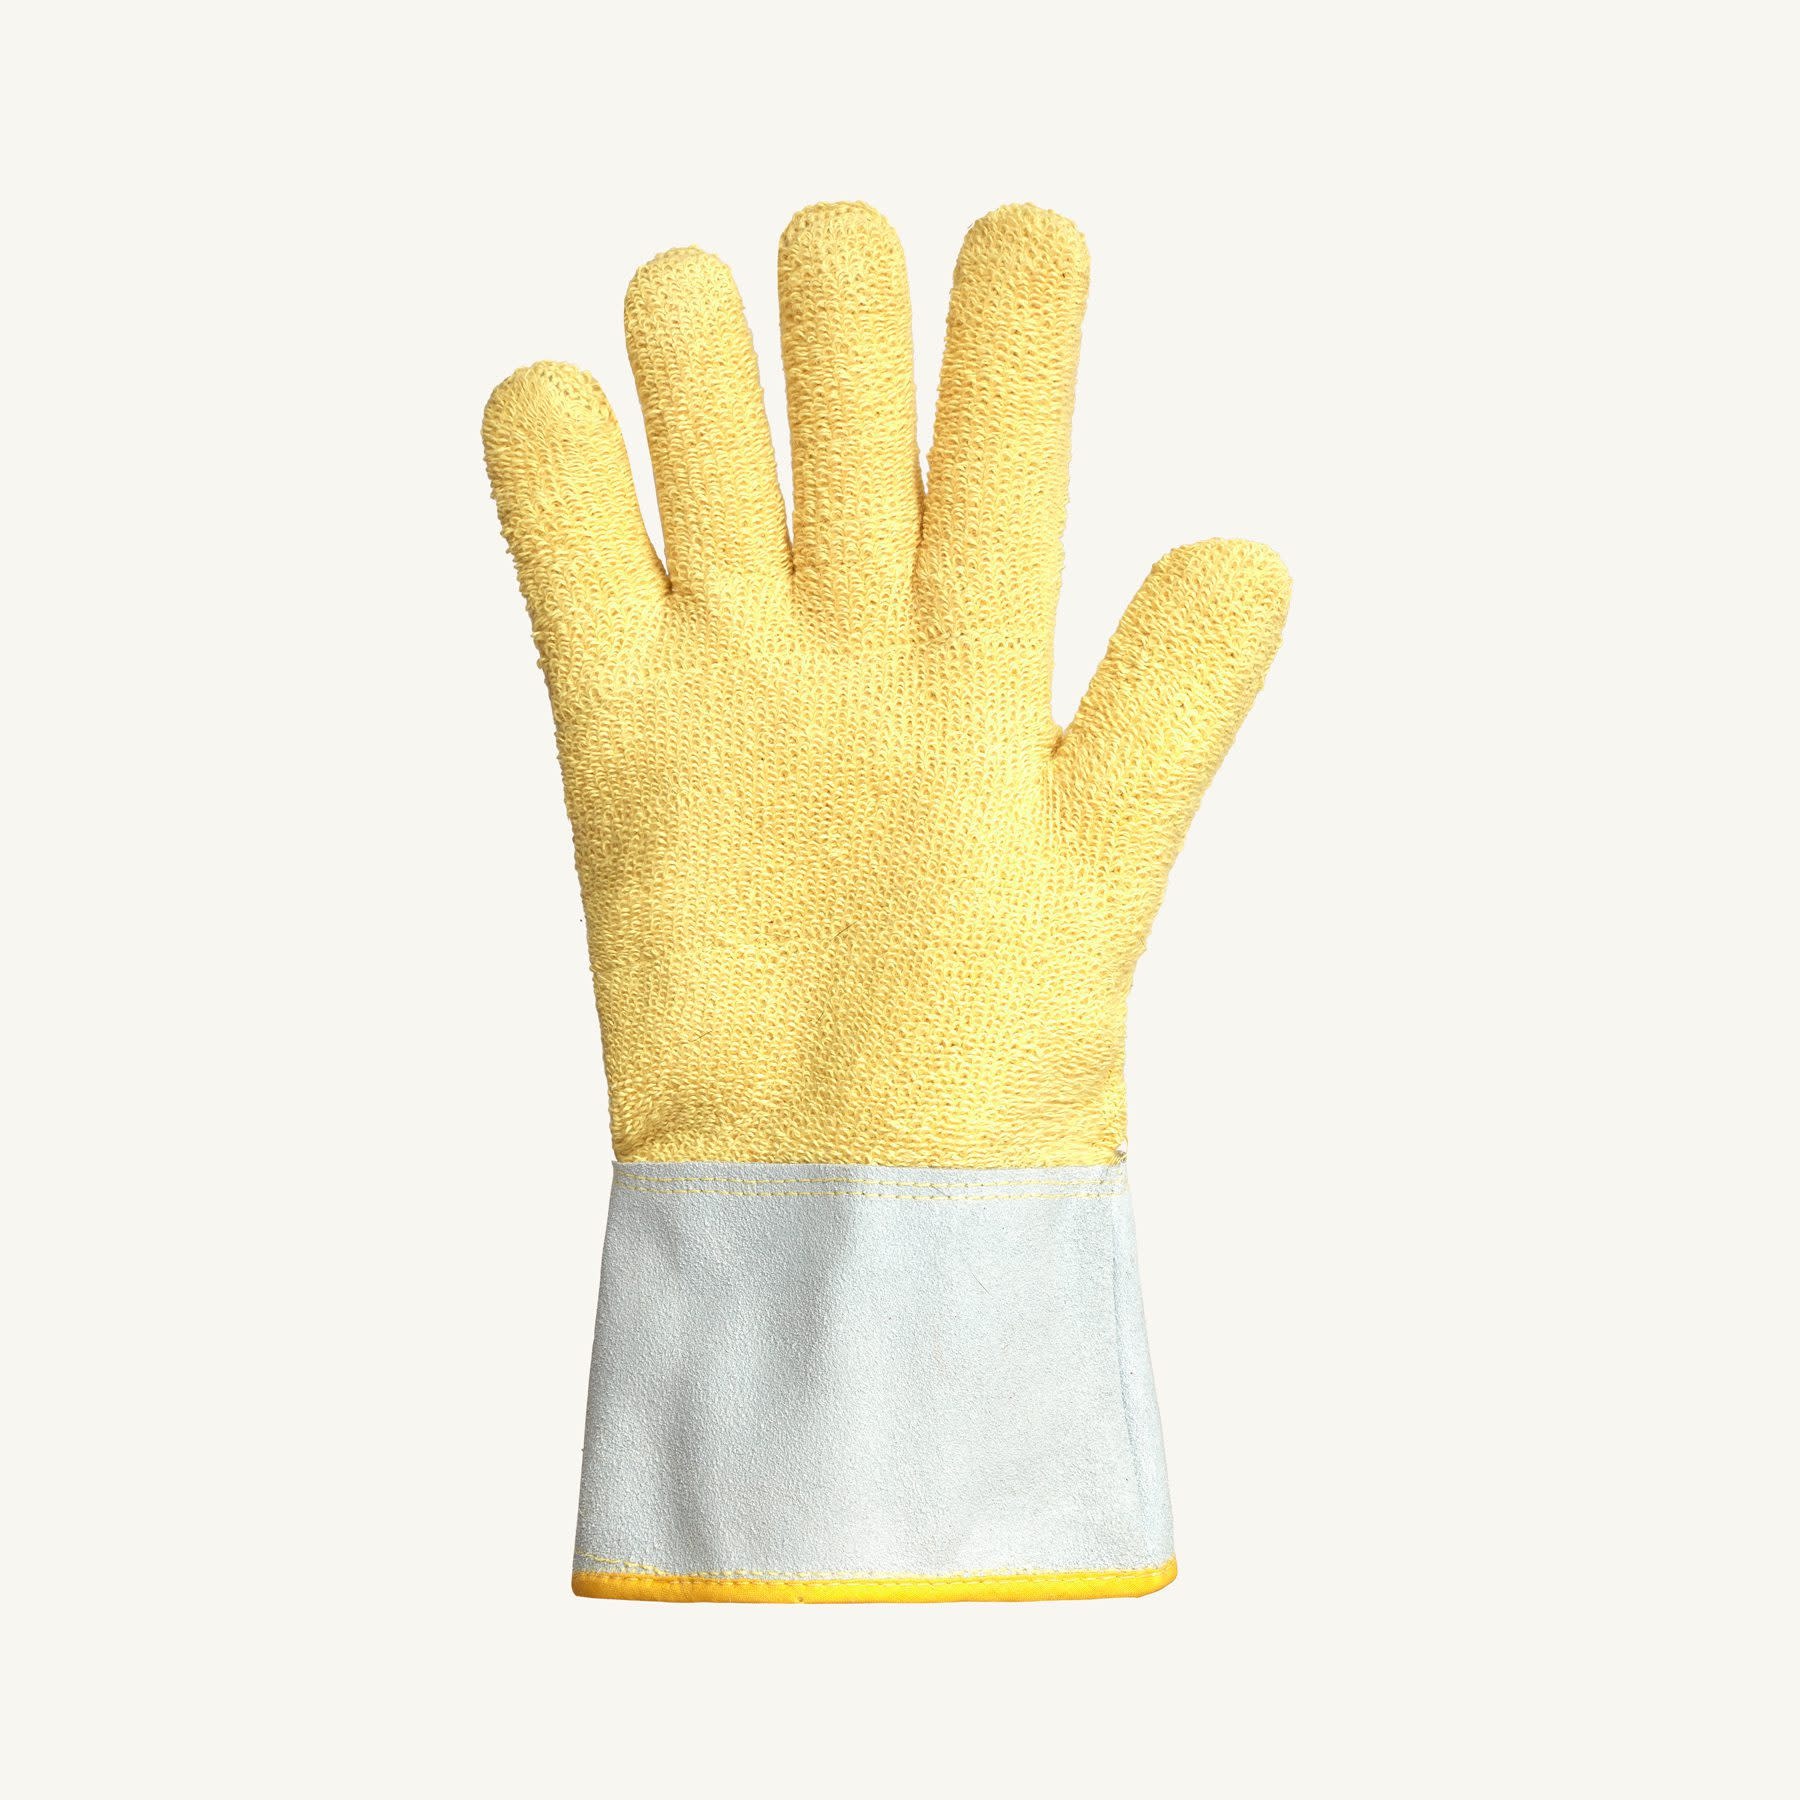 Superior Glove "Dragon" High Temperature Gloves